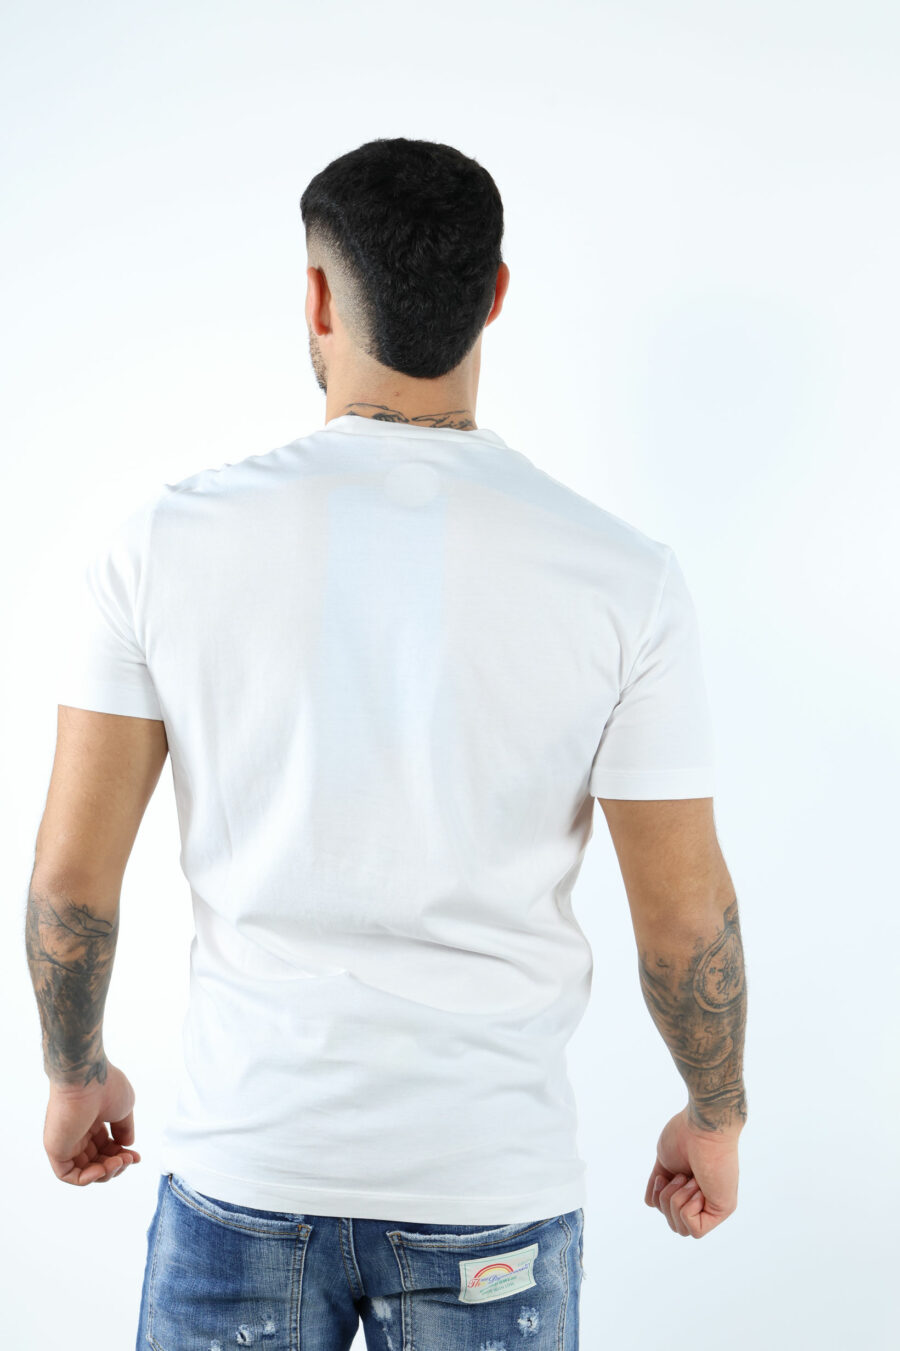 Weißes T-Shirt mit Maxilogo "ceresio 9, milano" - 106684